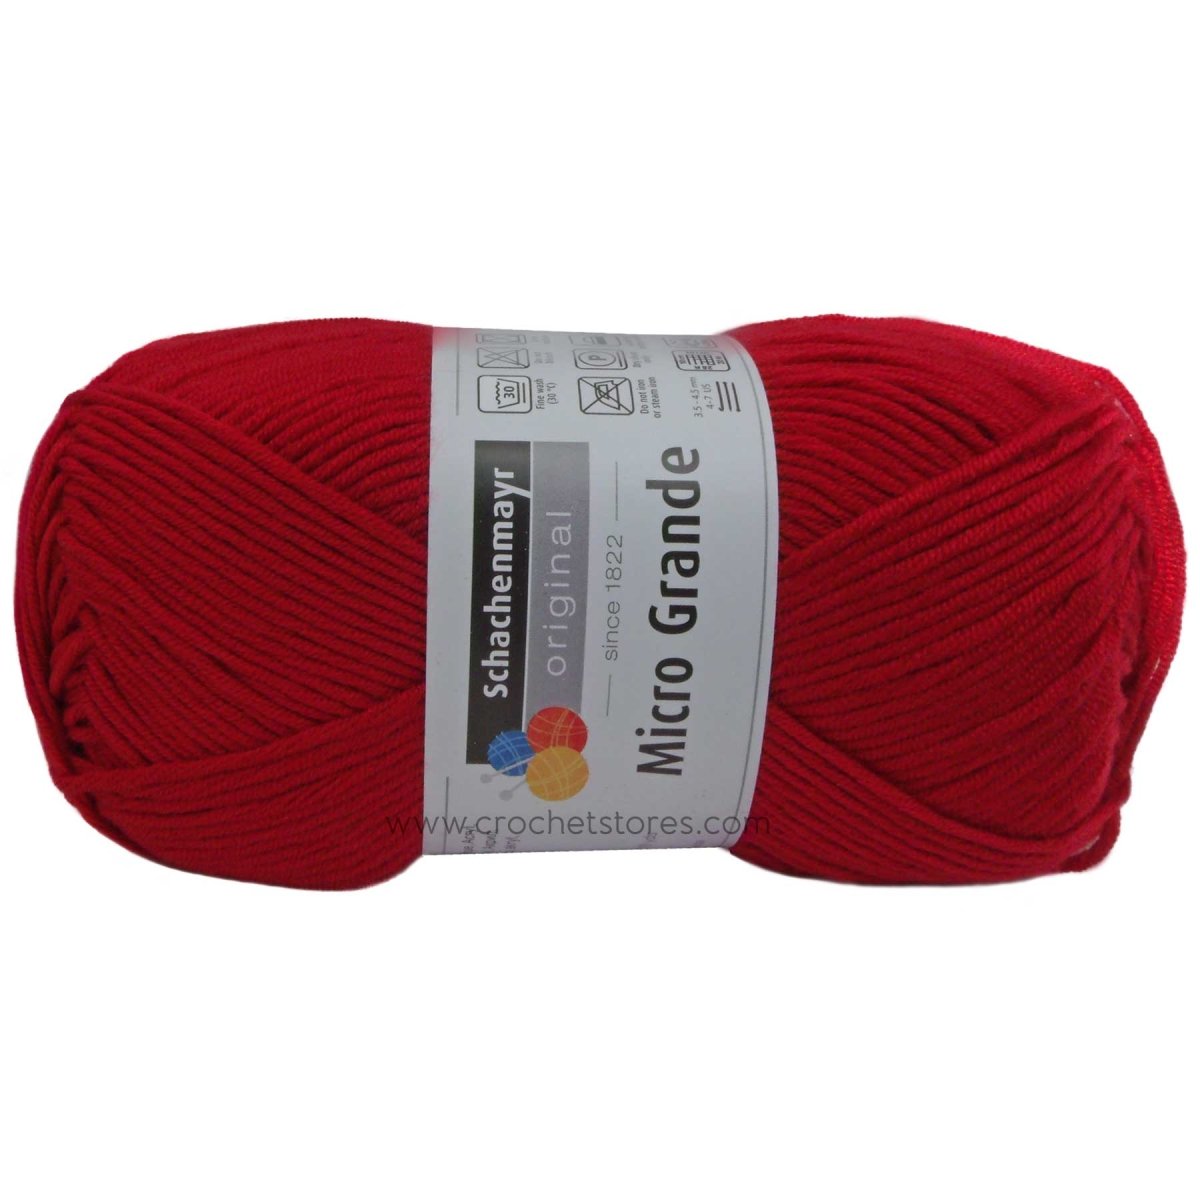 MICRO GRANDE - Crochetstores9807313-1684082700870998